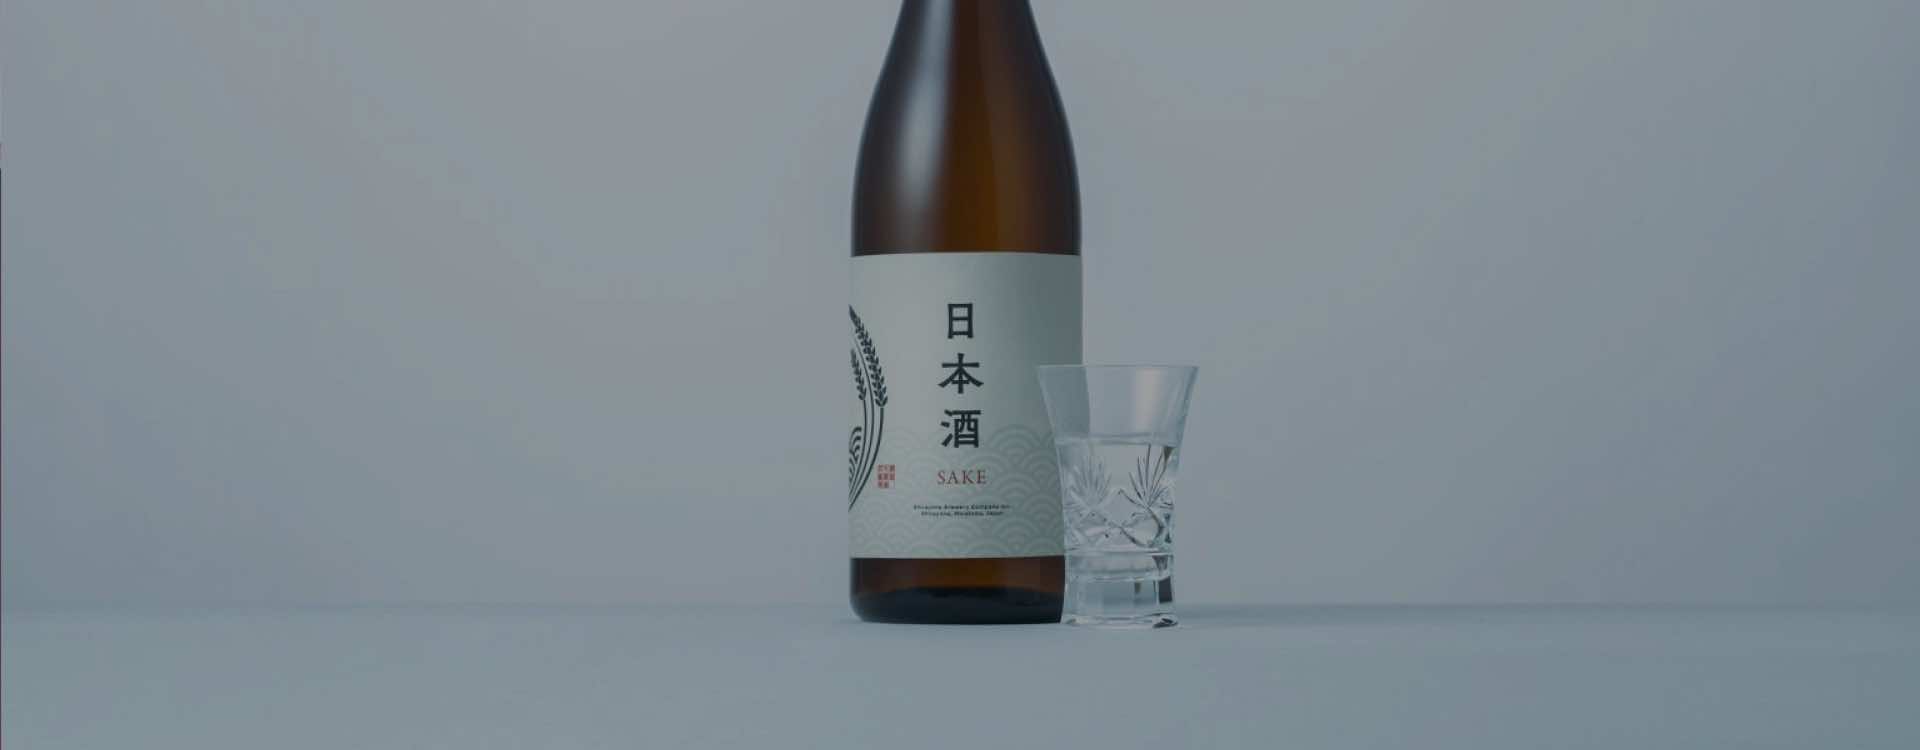 Slide: Japanese Sake